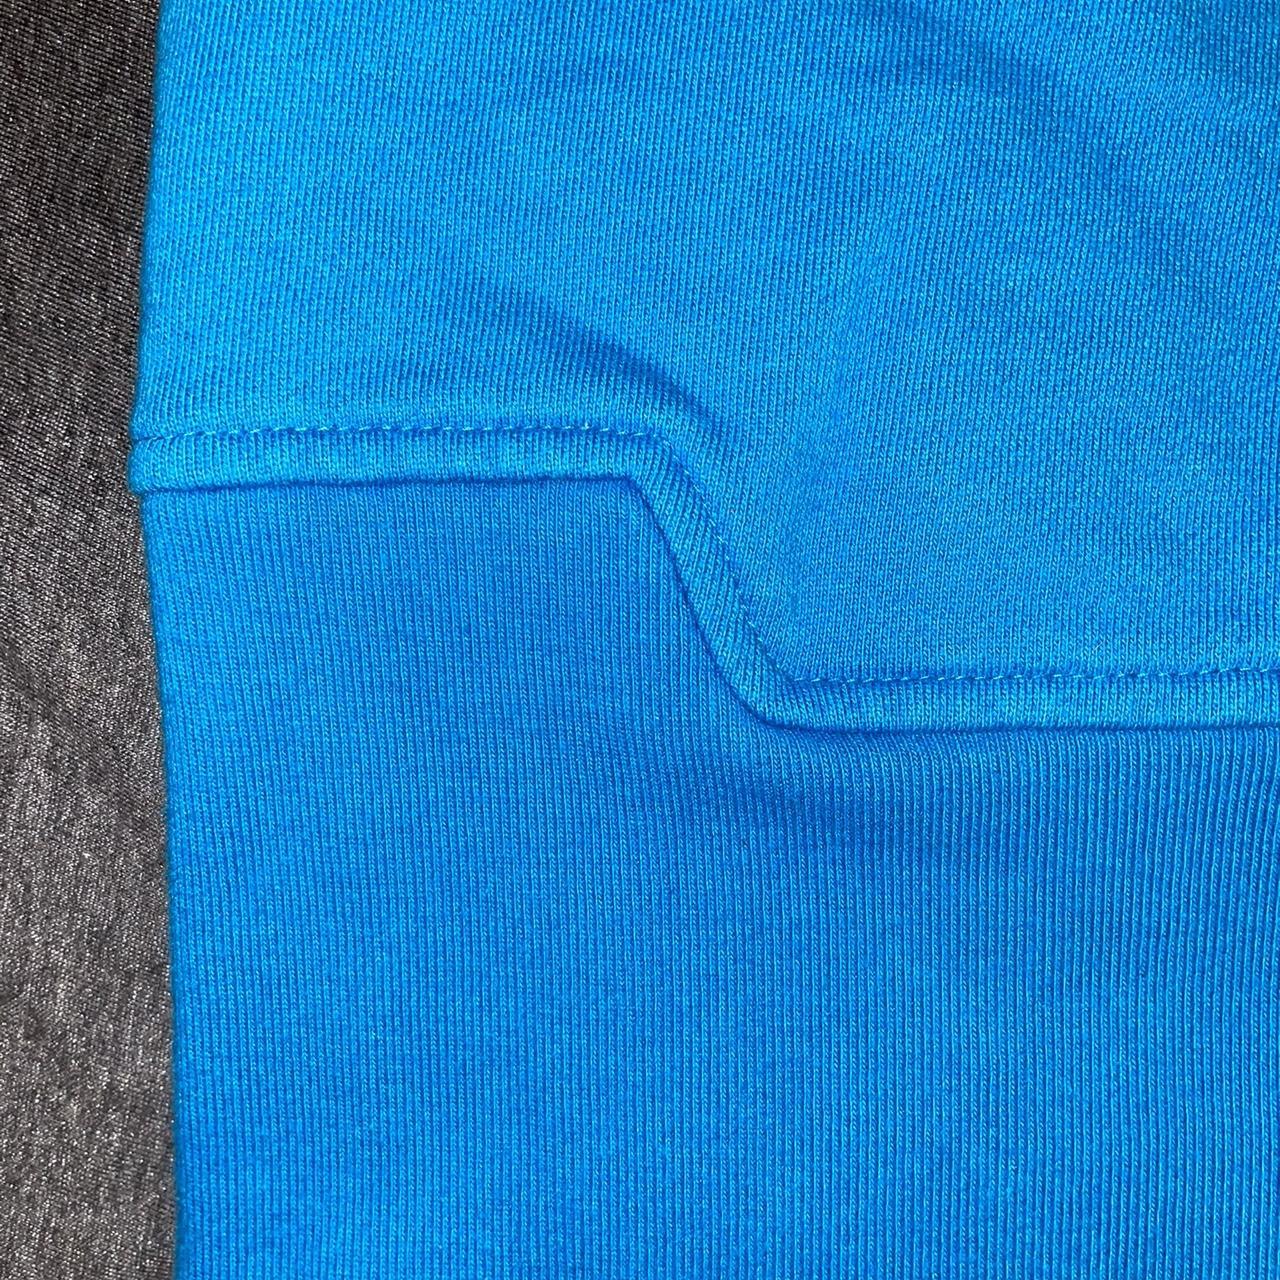 Boxfresh Women's Blue and Silver Sweatshirt (4)